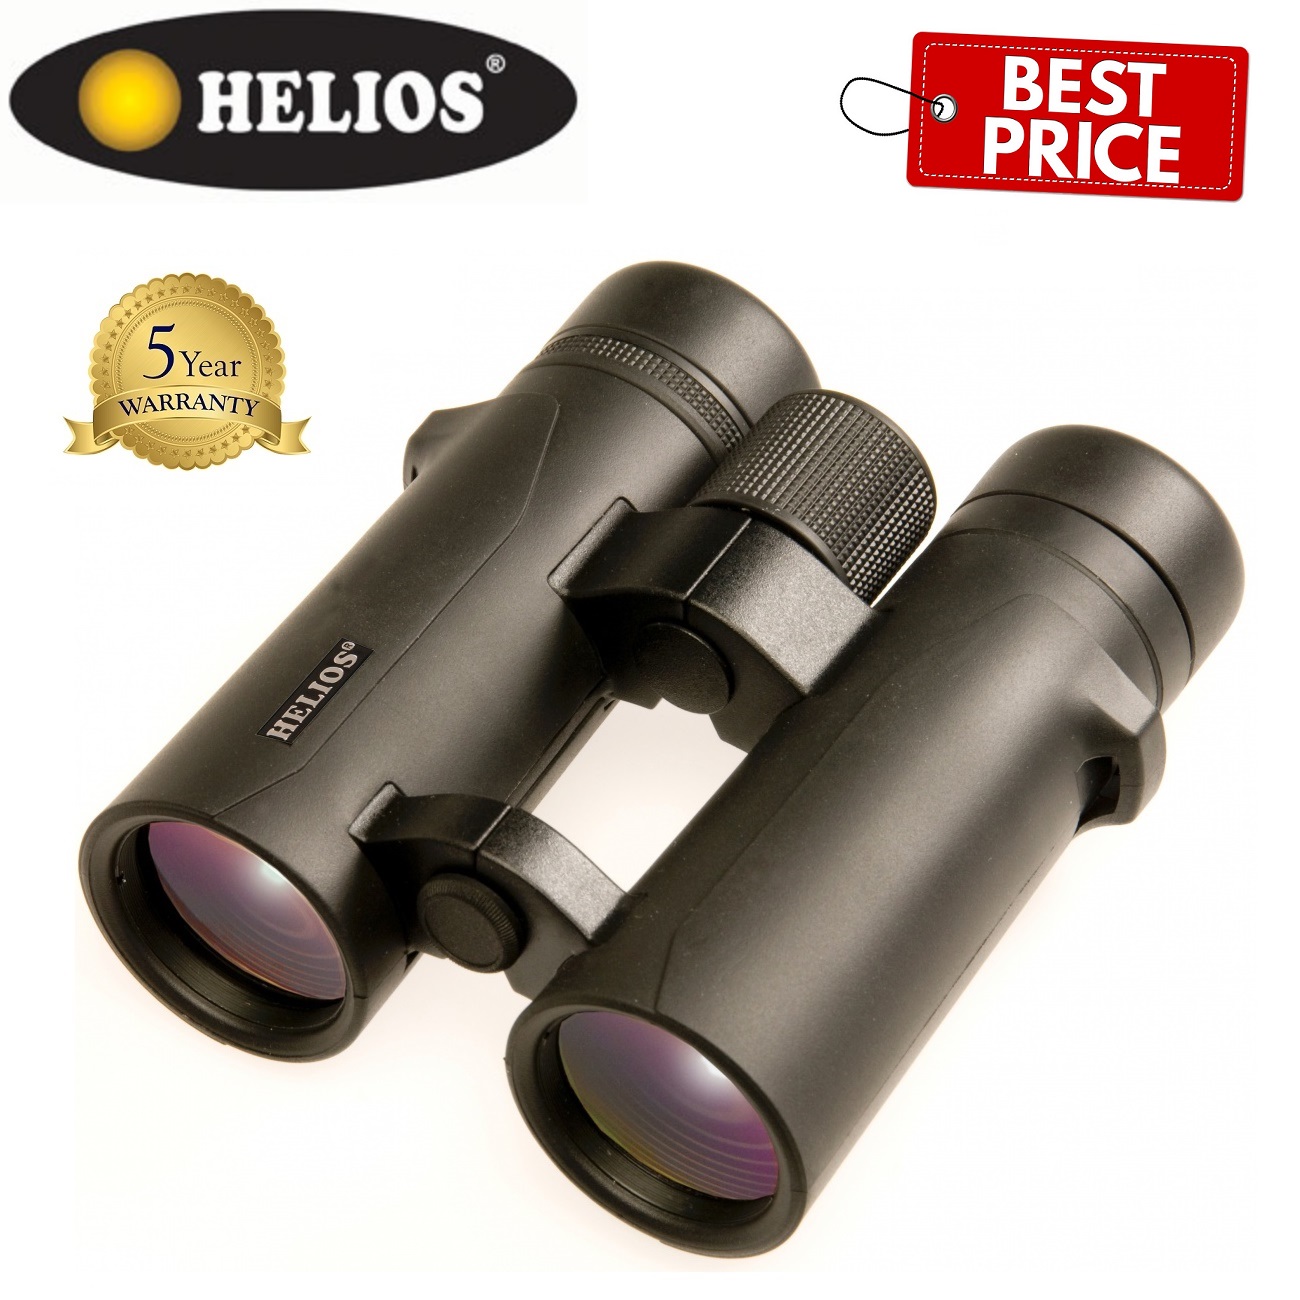 Helios Nitrosport 10x42 Binoculars